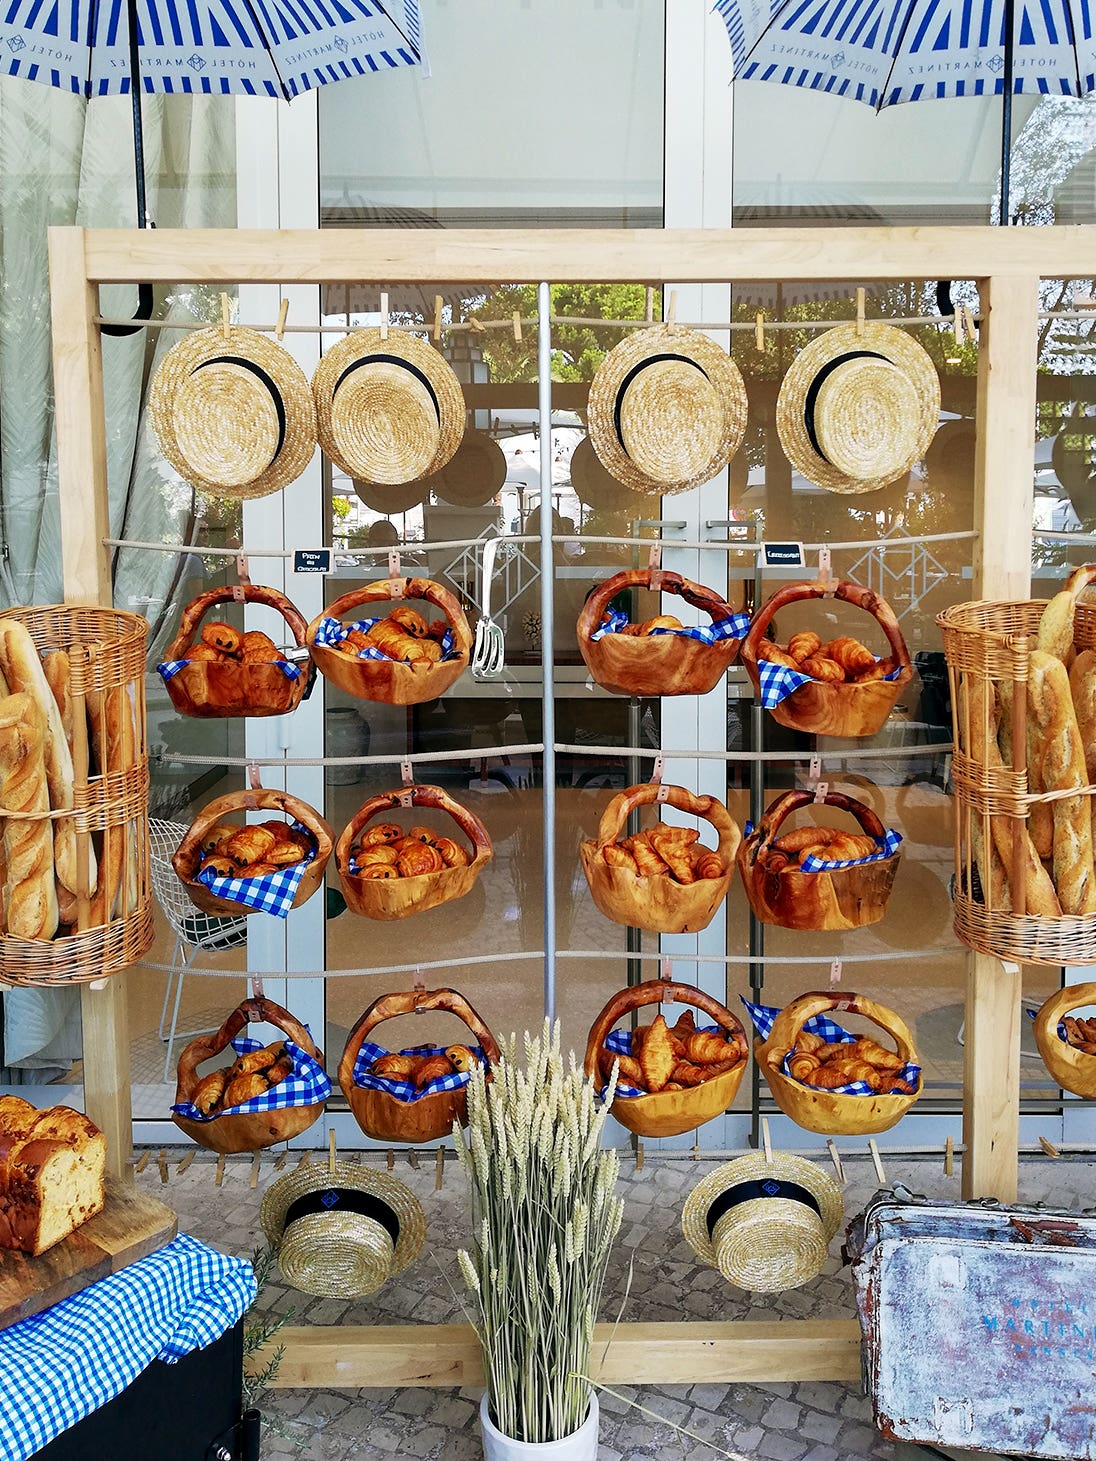 Baskets of croissants